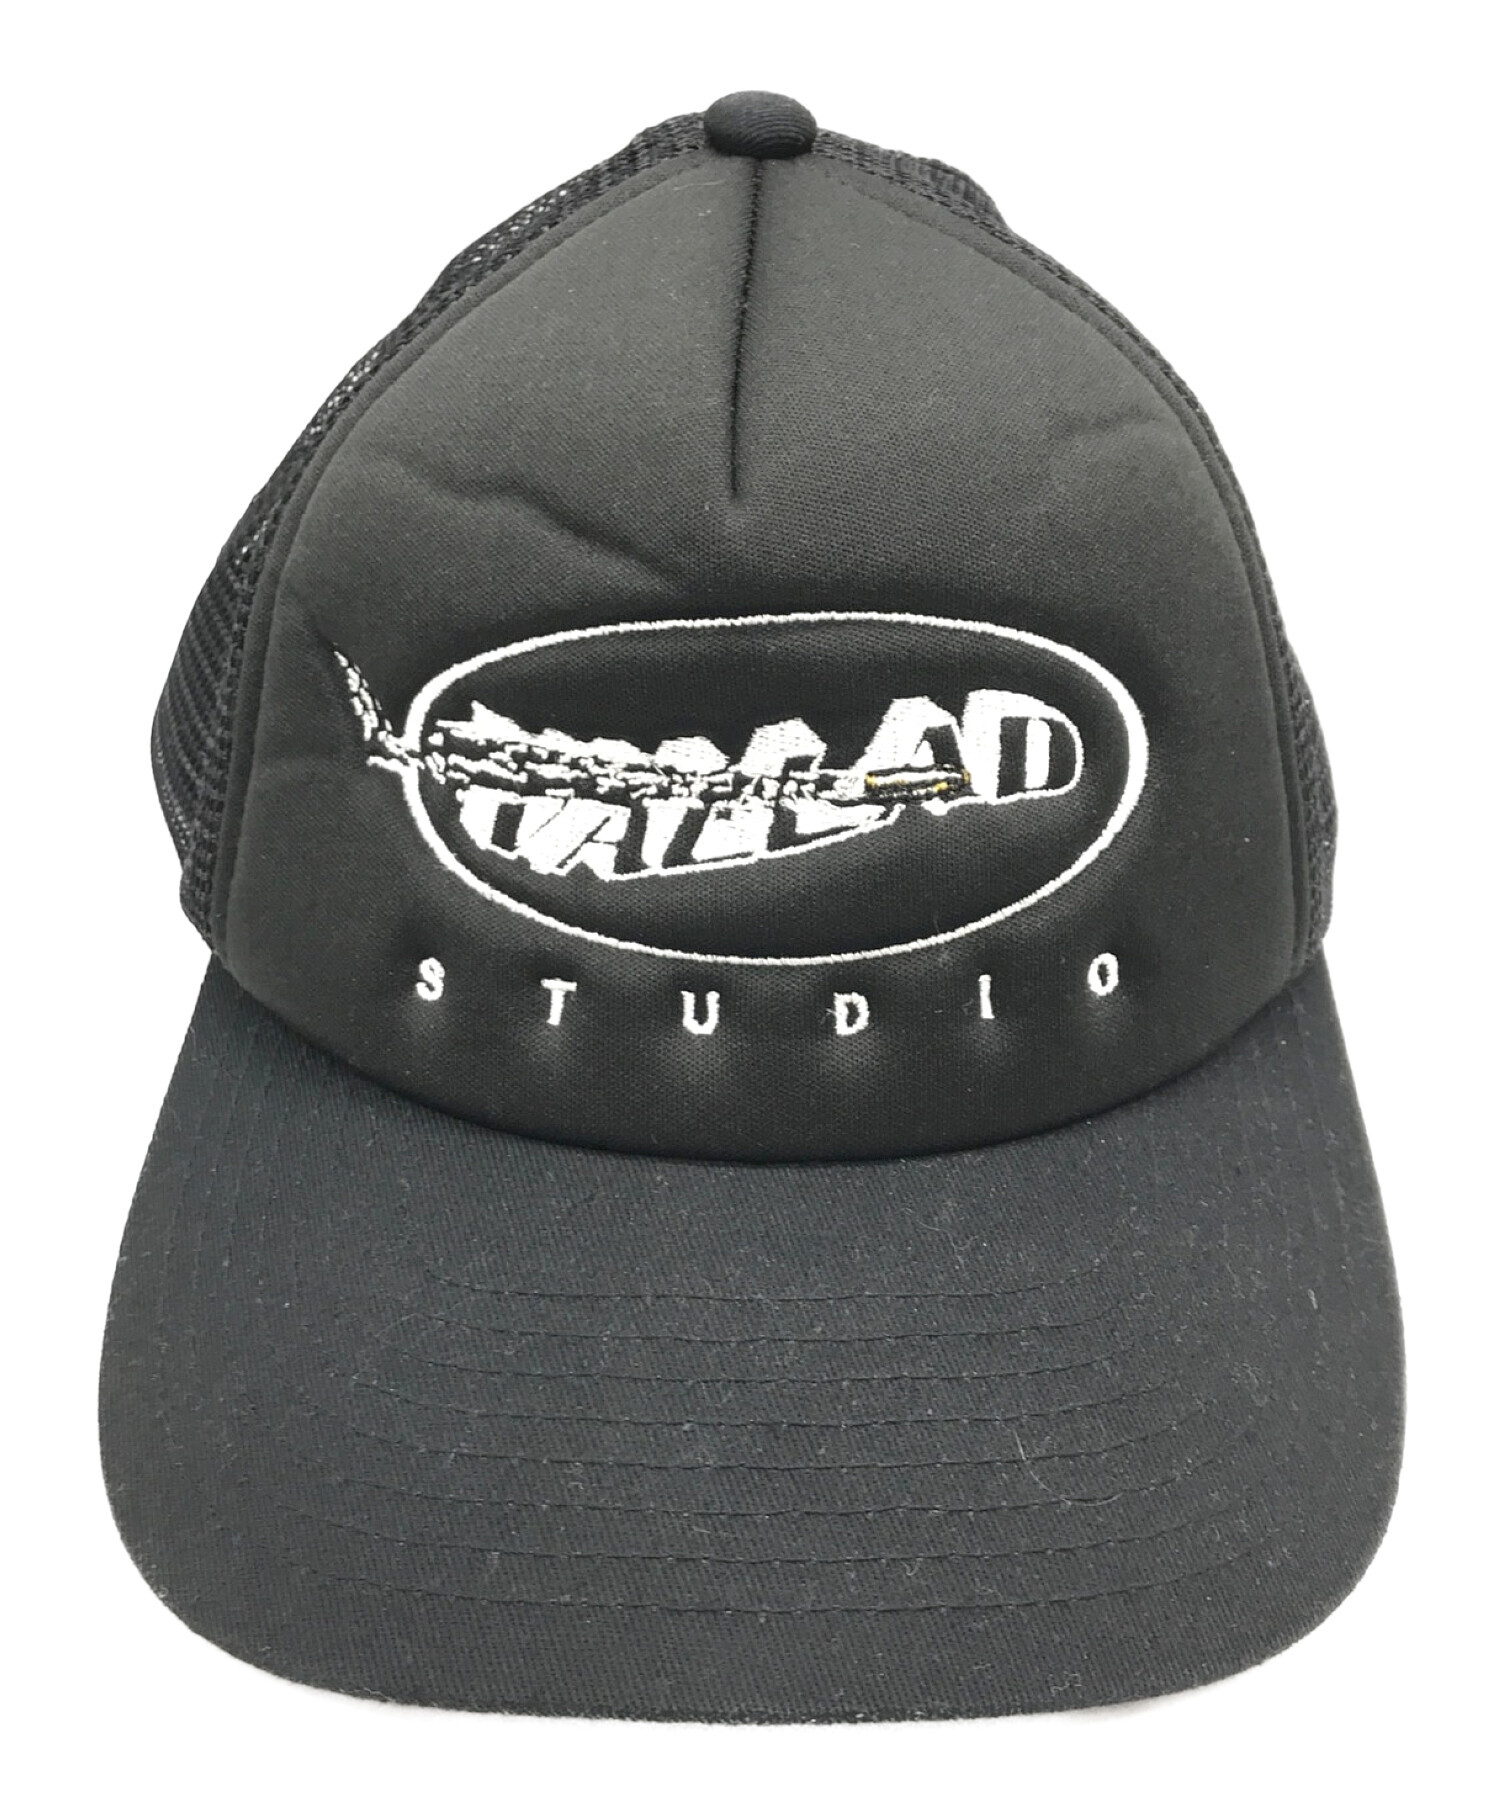 数量限定HOTVallad studio Cap 帽子